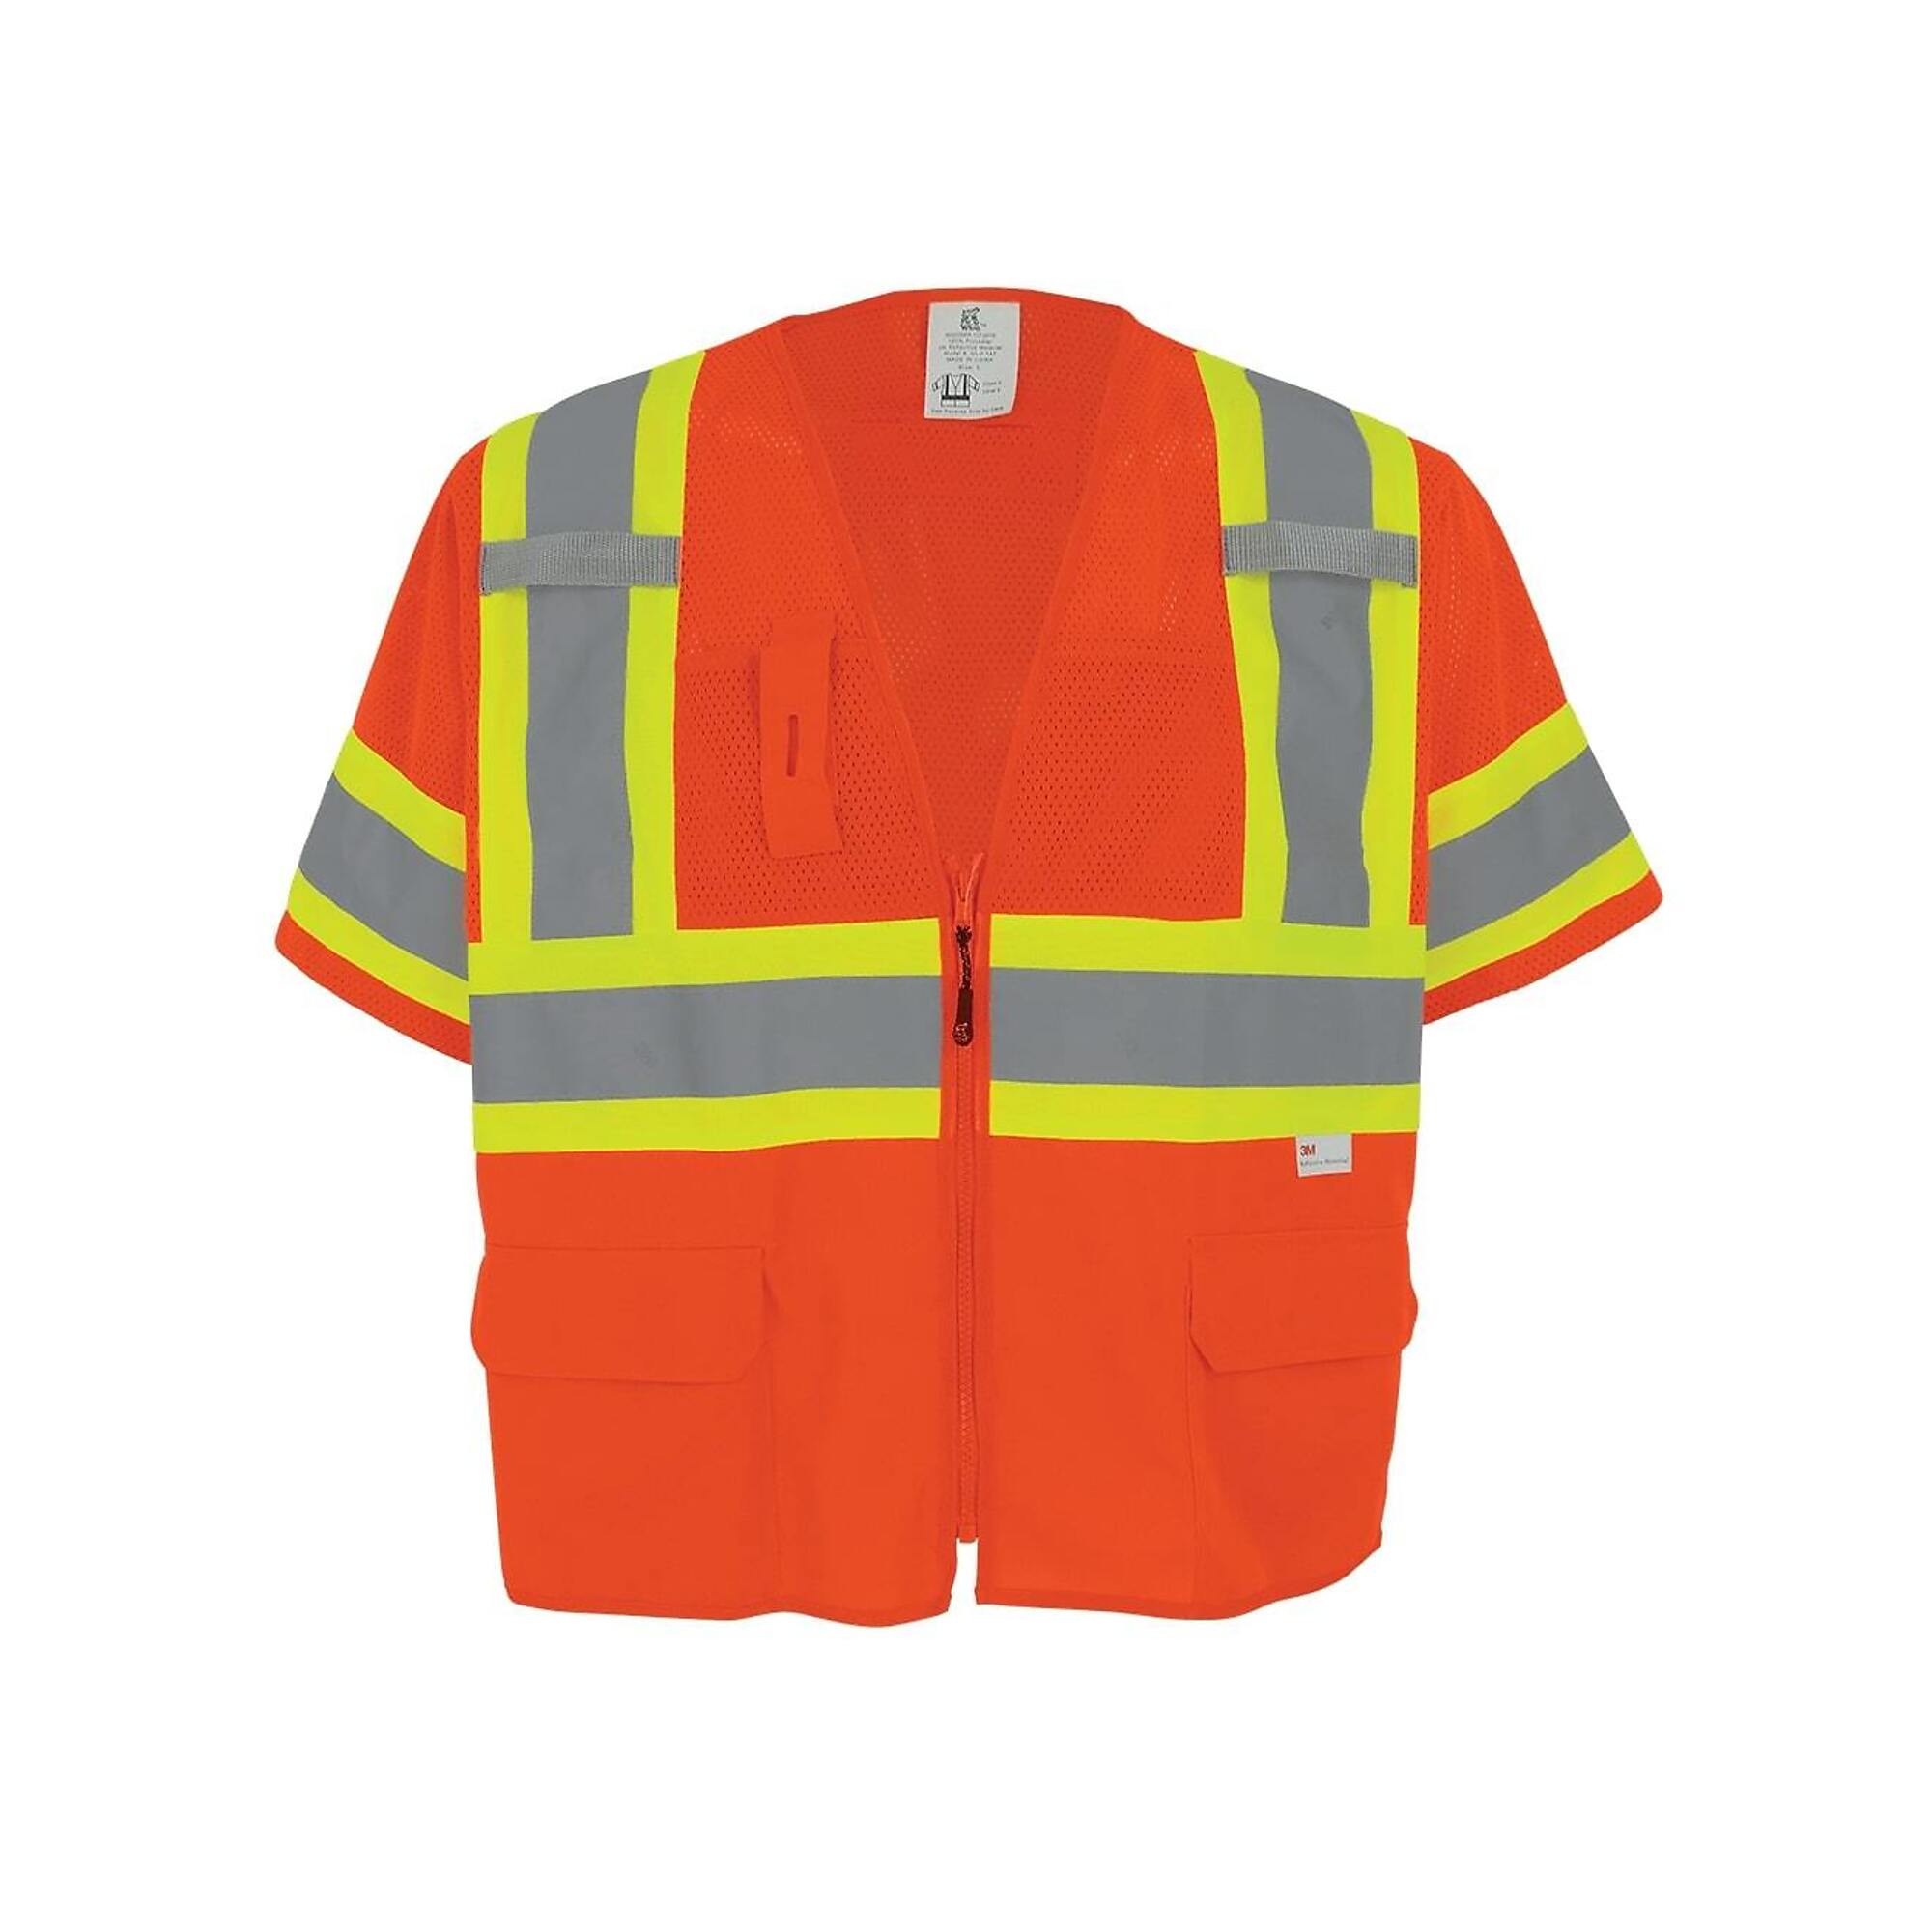 FrogWear, HV Orange, Class 3 6 Pockets, With Sleeves Solid/Mesh Vest, Size L, Color High-Visibility Orange, Model GLO-147-L